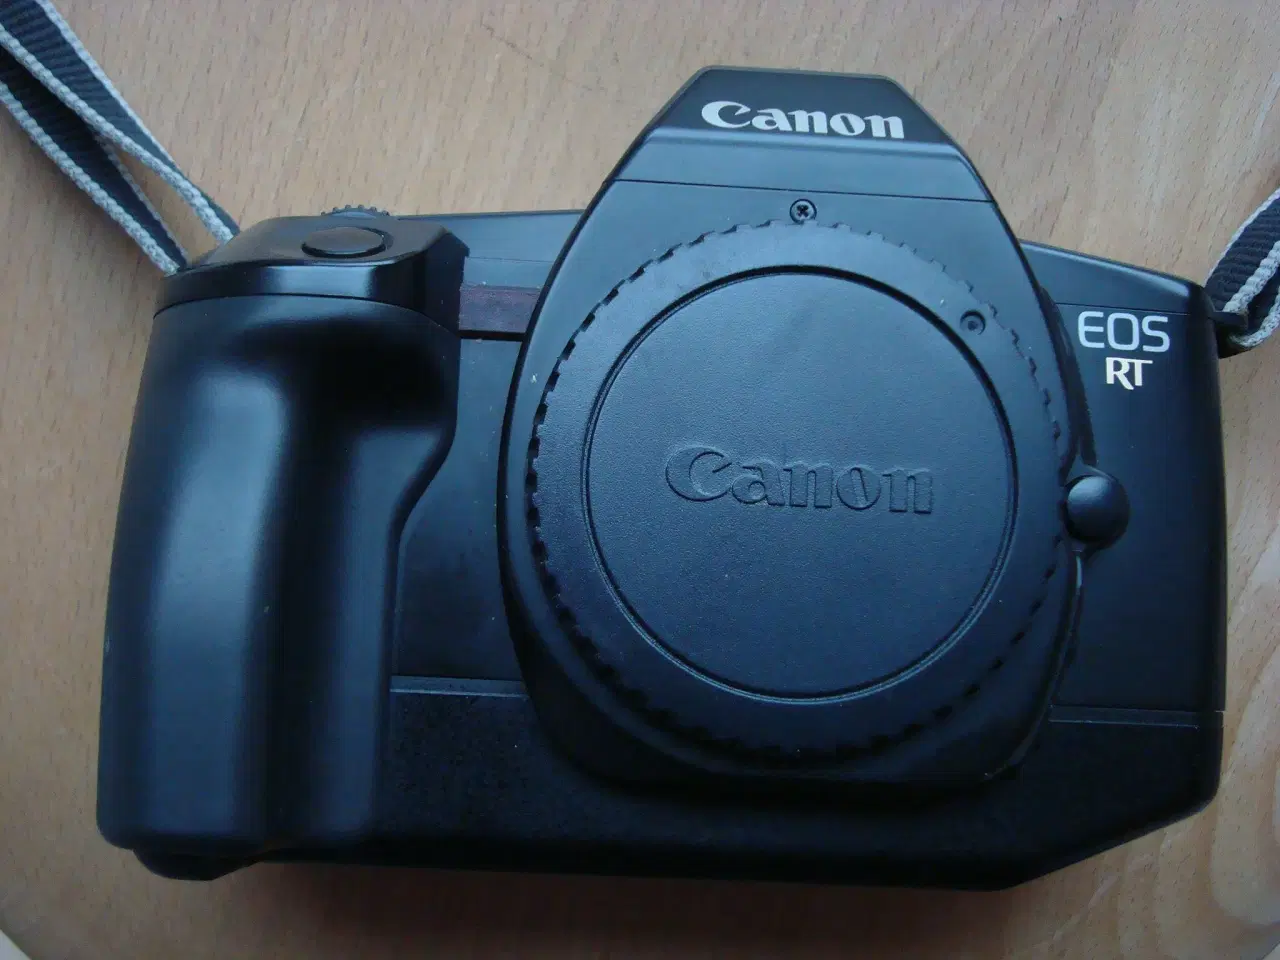 Billede 3 - Semi Prof Canon EOS RT sort kamerahus